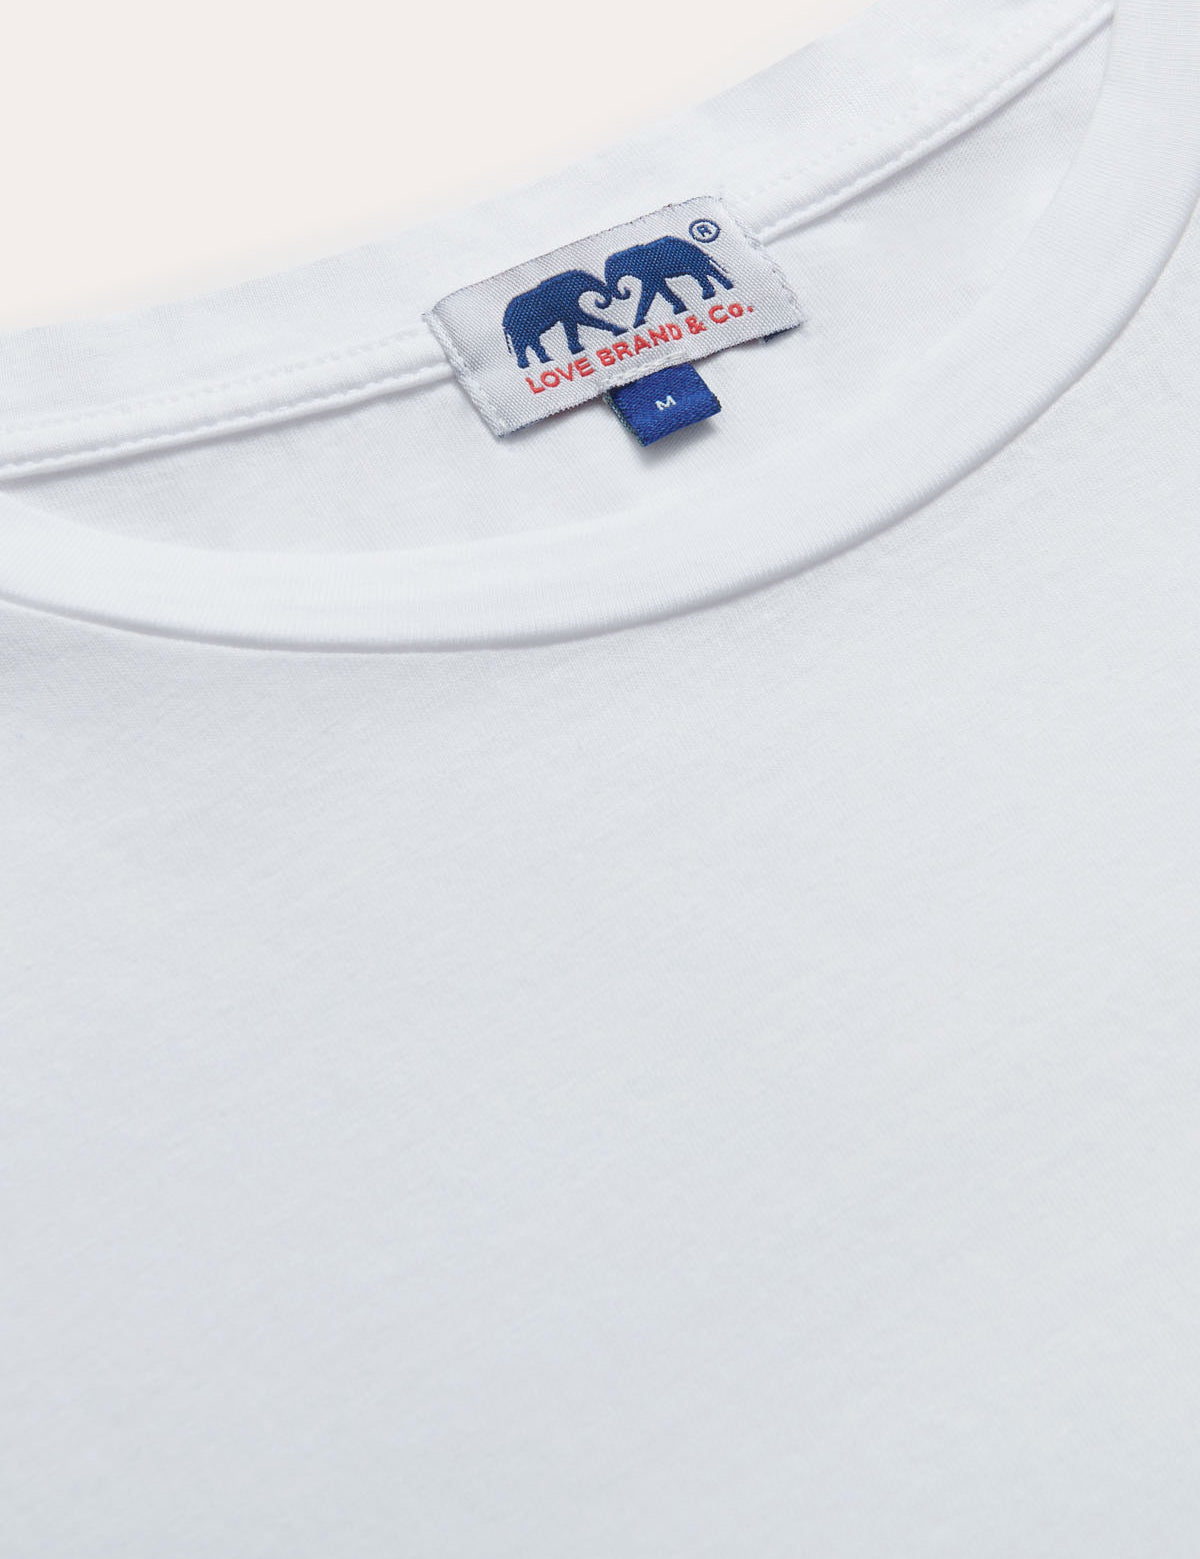 Men's White Lockhart T-Shirt with brand logo on neckline.